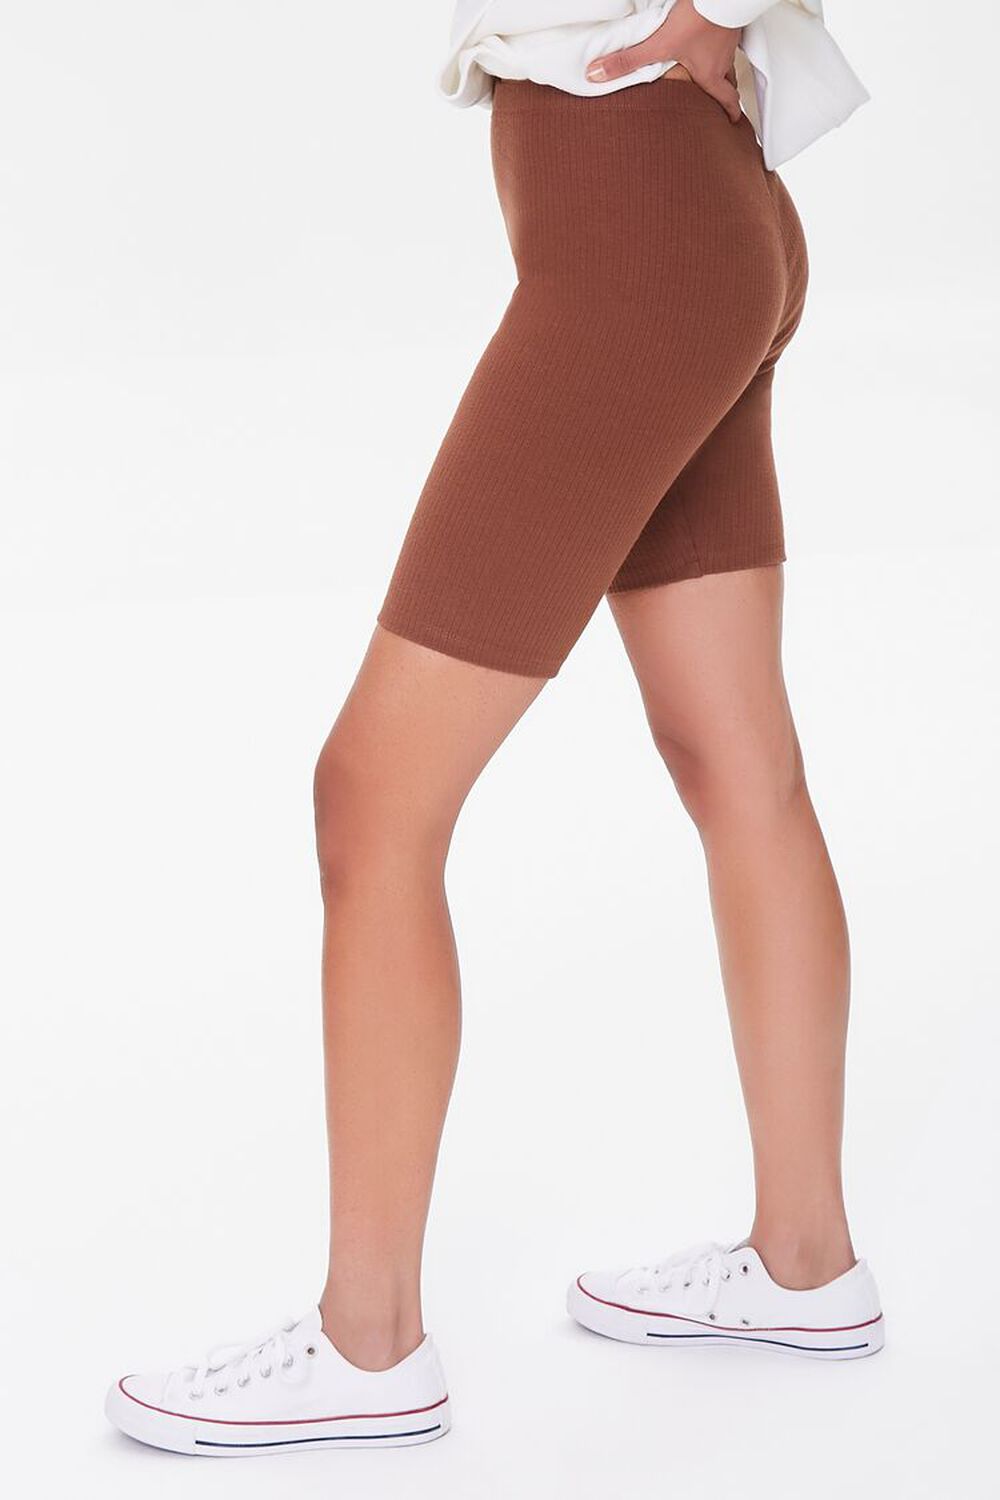 BROWN Cotton-Blend Biker Shorts, image 3